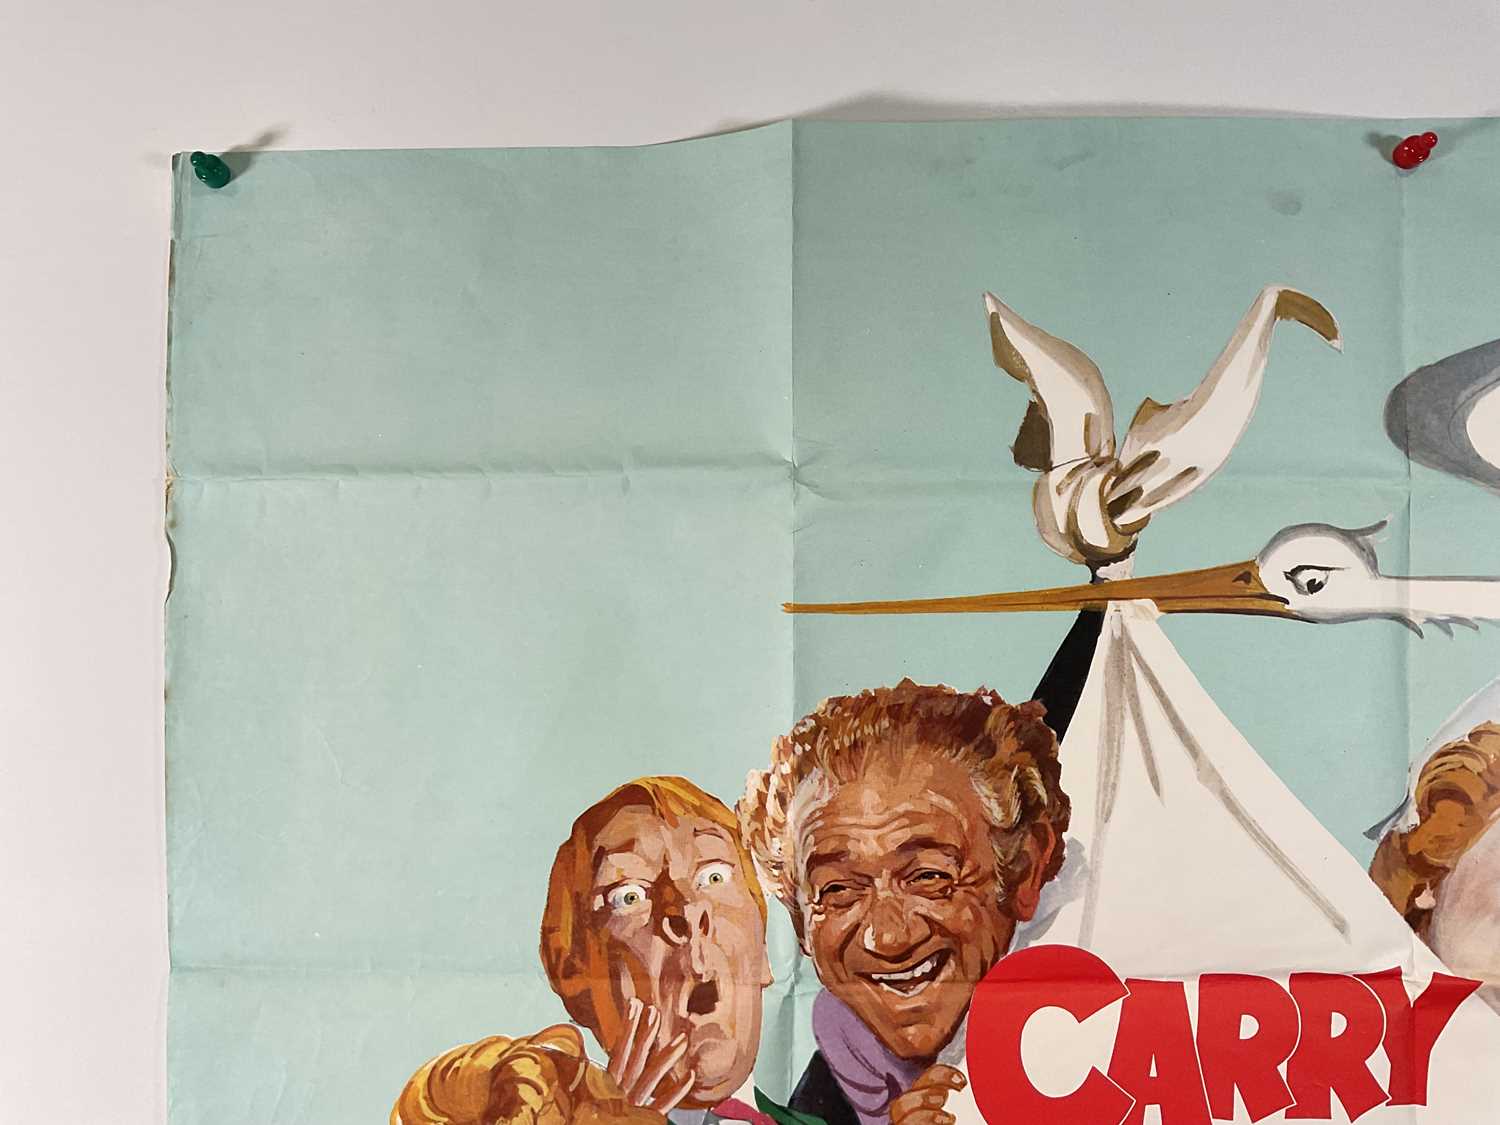 CARRY ON MATRON (1972) UK Quad film poster, folded. - Image 5 of 6